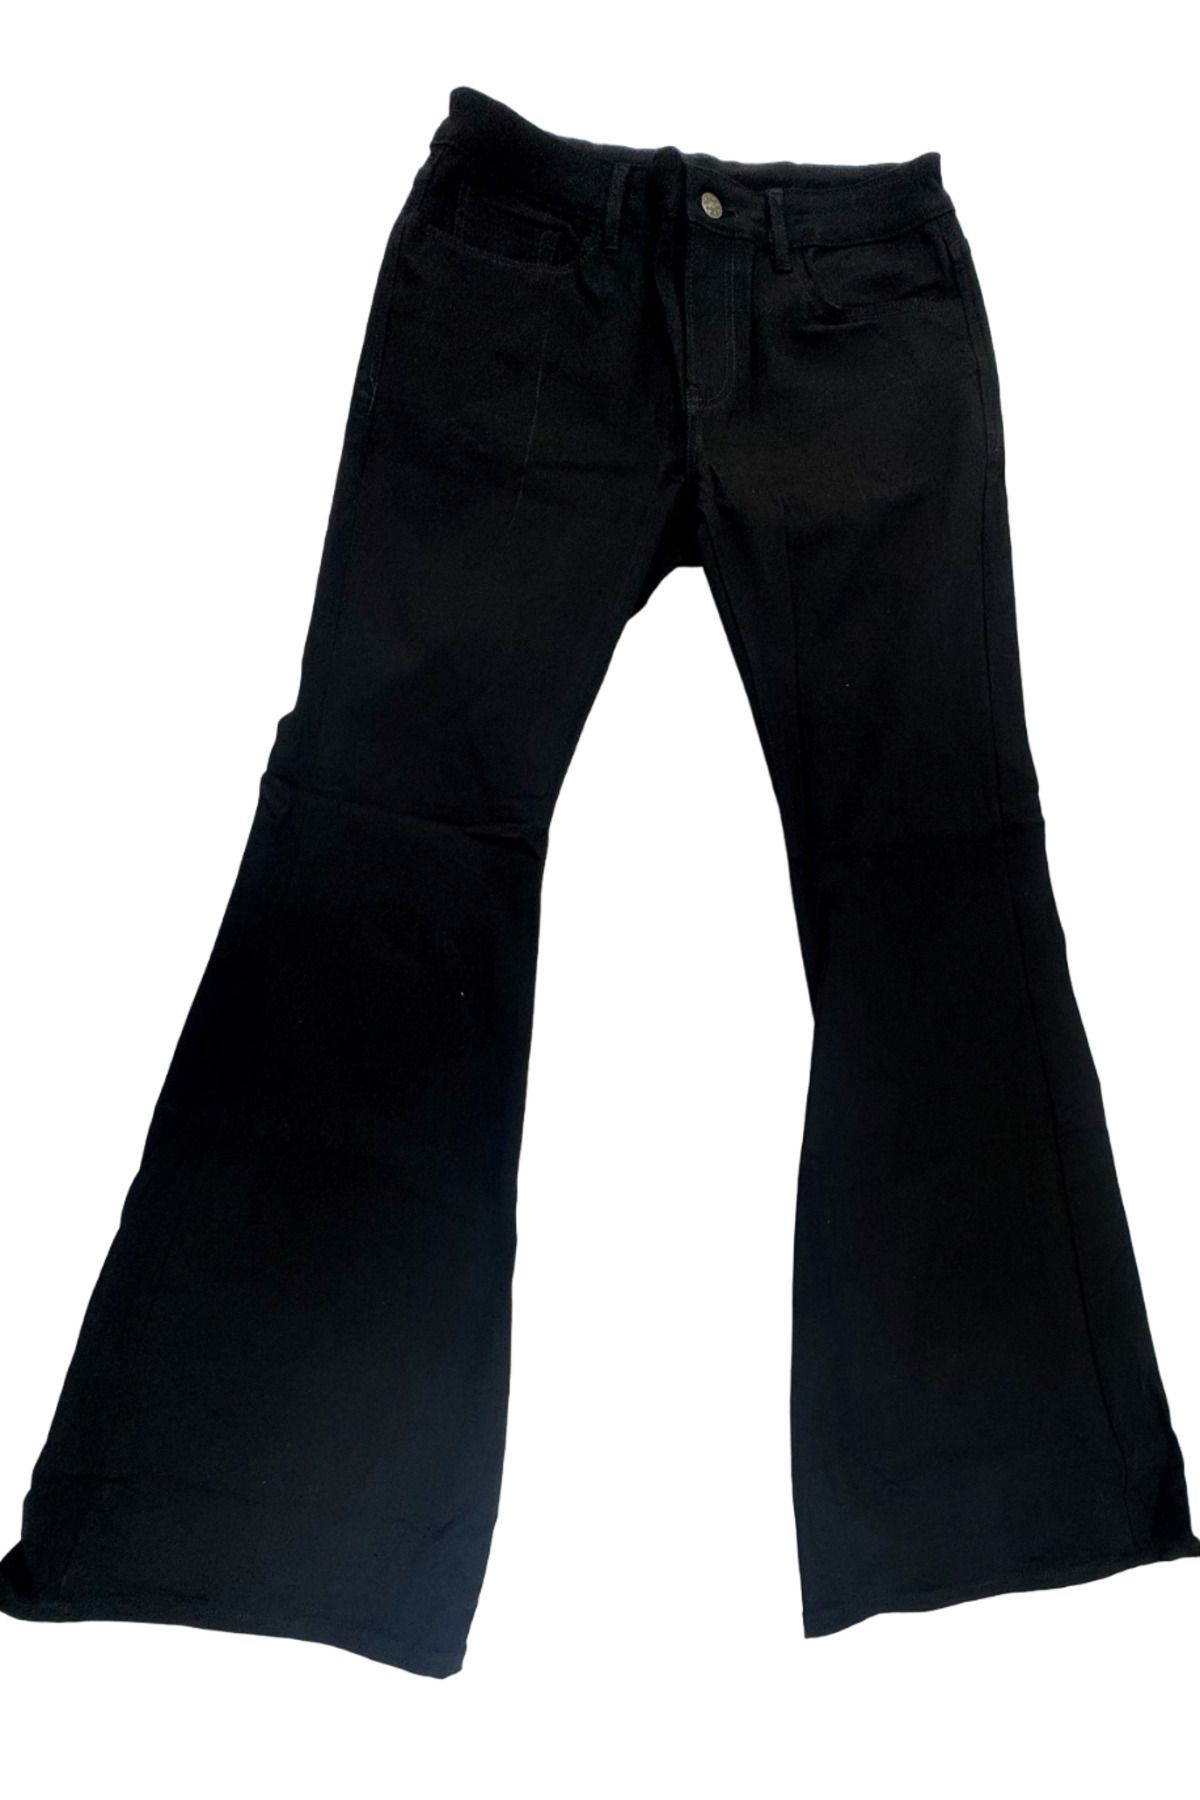 Aeropostale Sample Siyah Kadın Kalın Kot Pantolon NO12 AEROPOSTALE